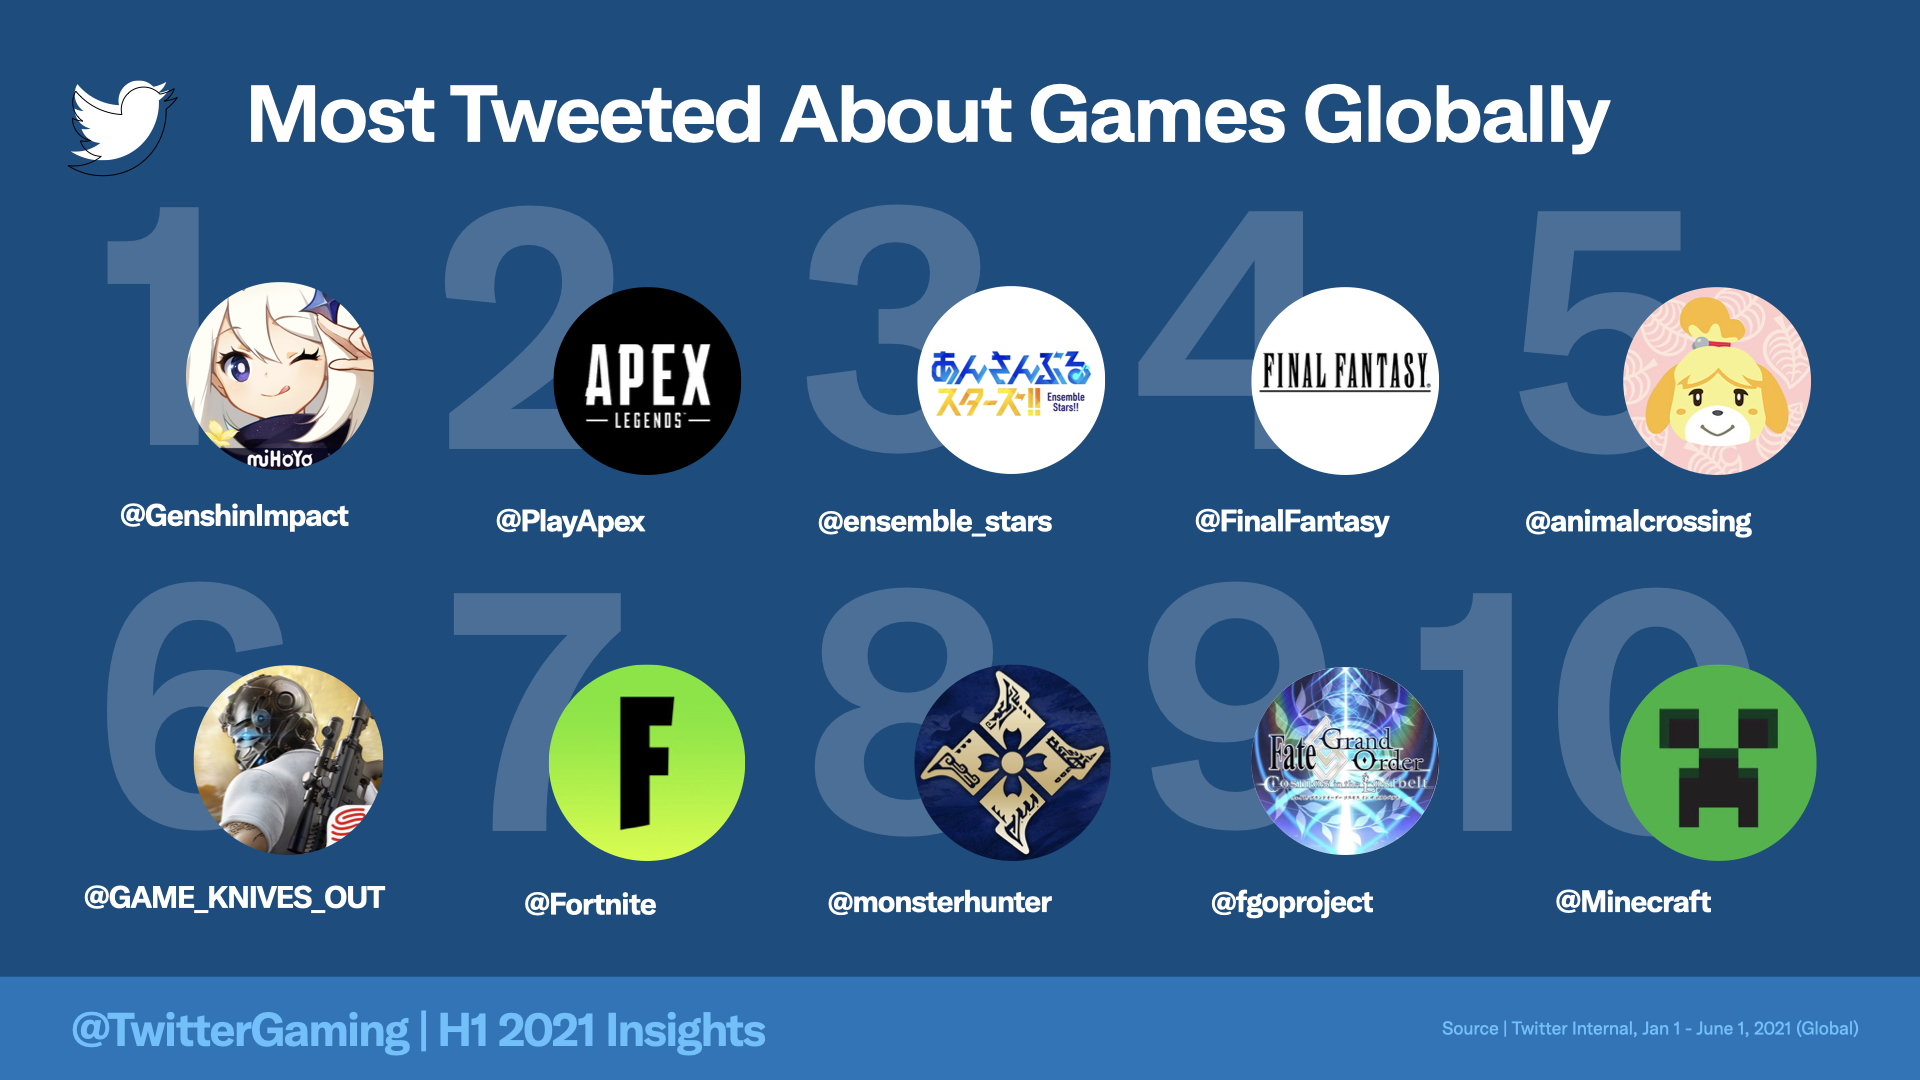 【Twitter公式】2021年上半期の「世界でもっともツイートされたビデオゲーム」でエーペックスレジェンズが『2位』に！！